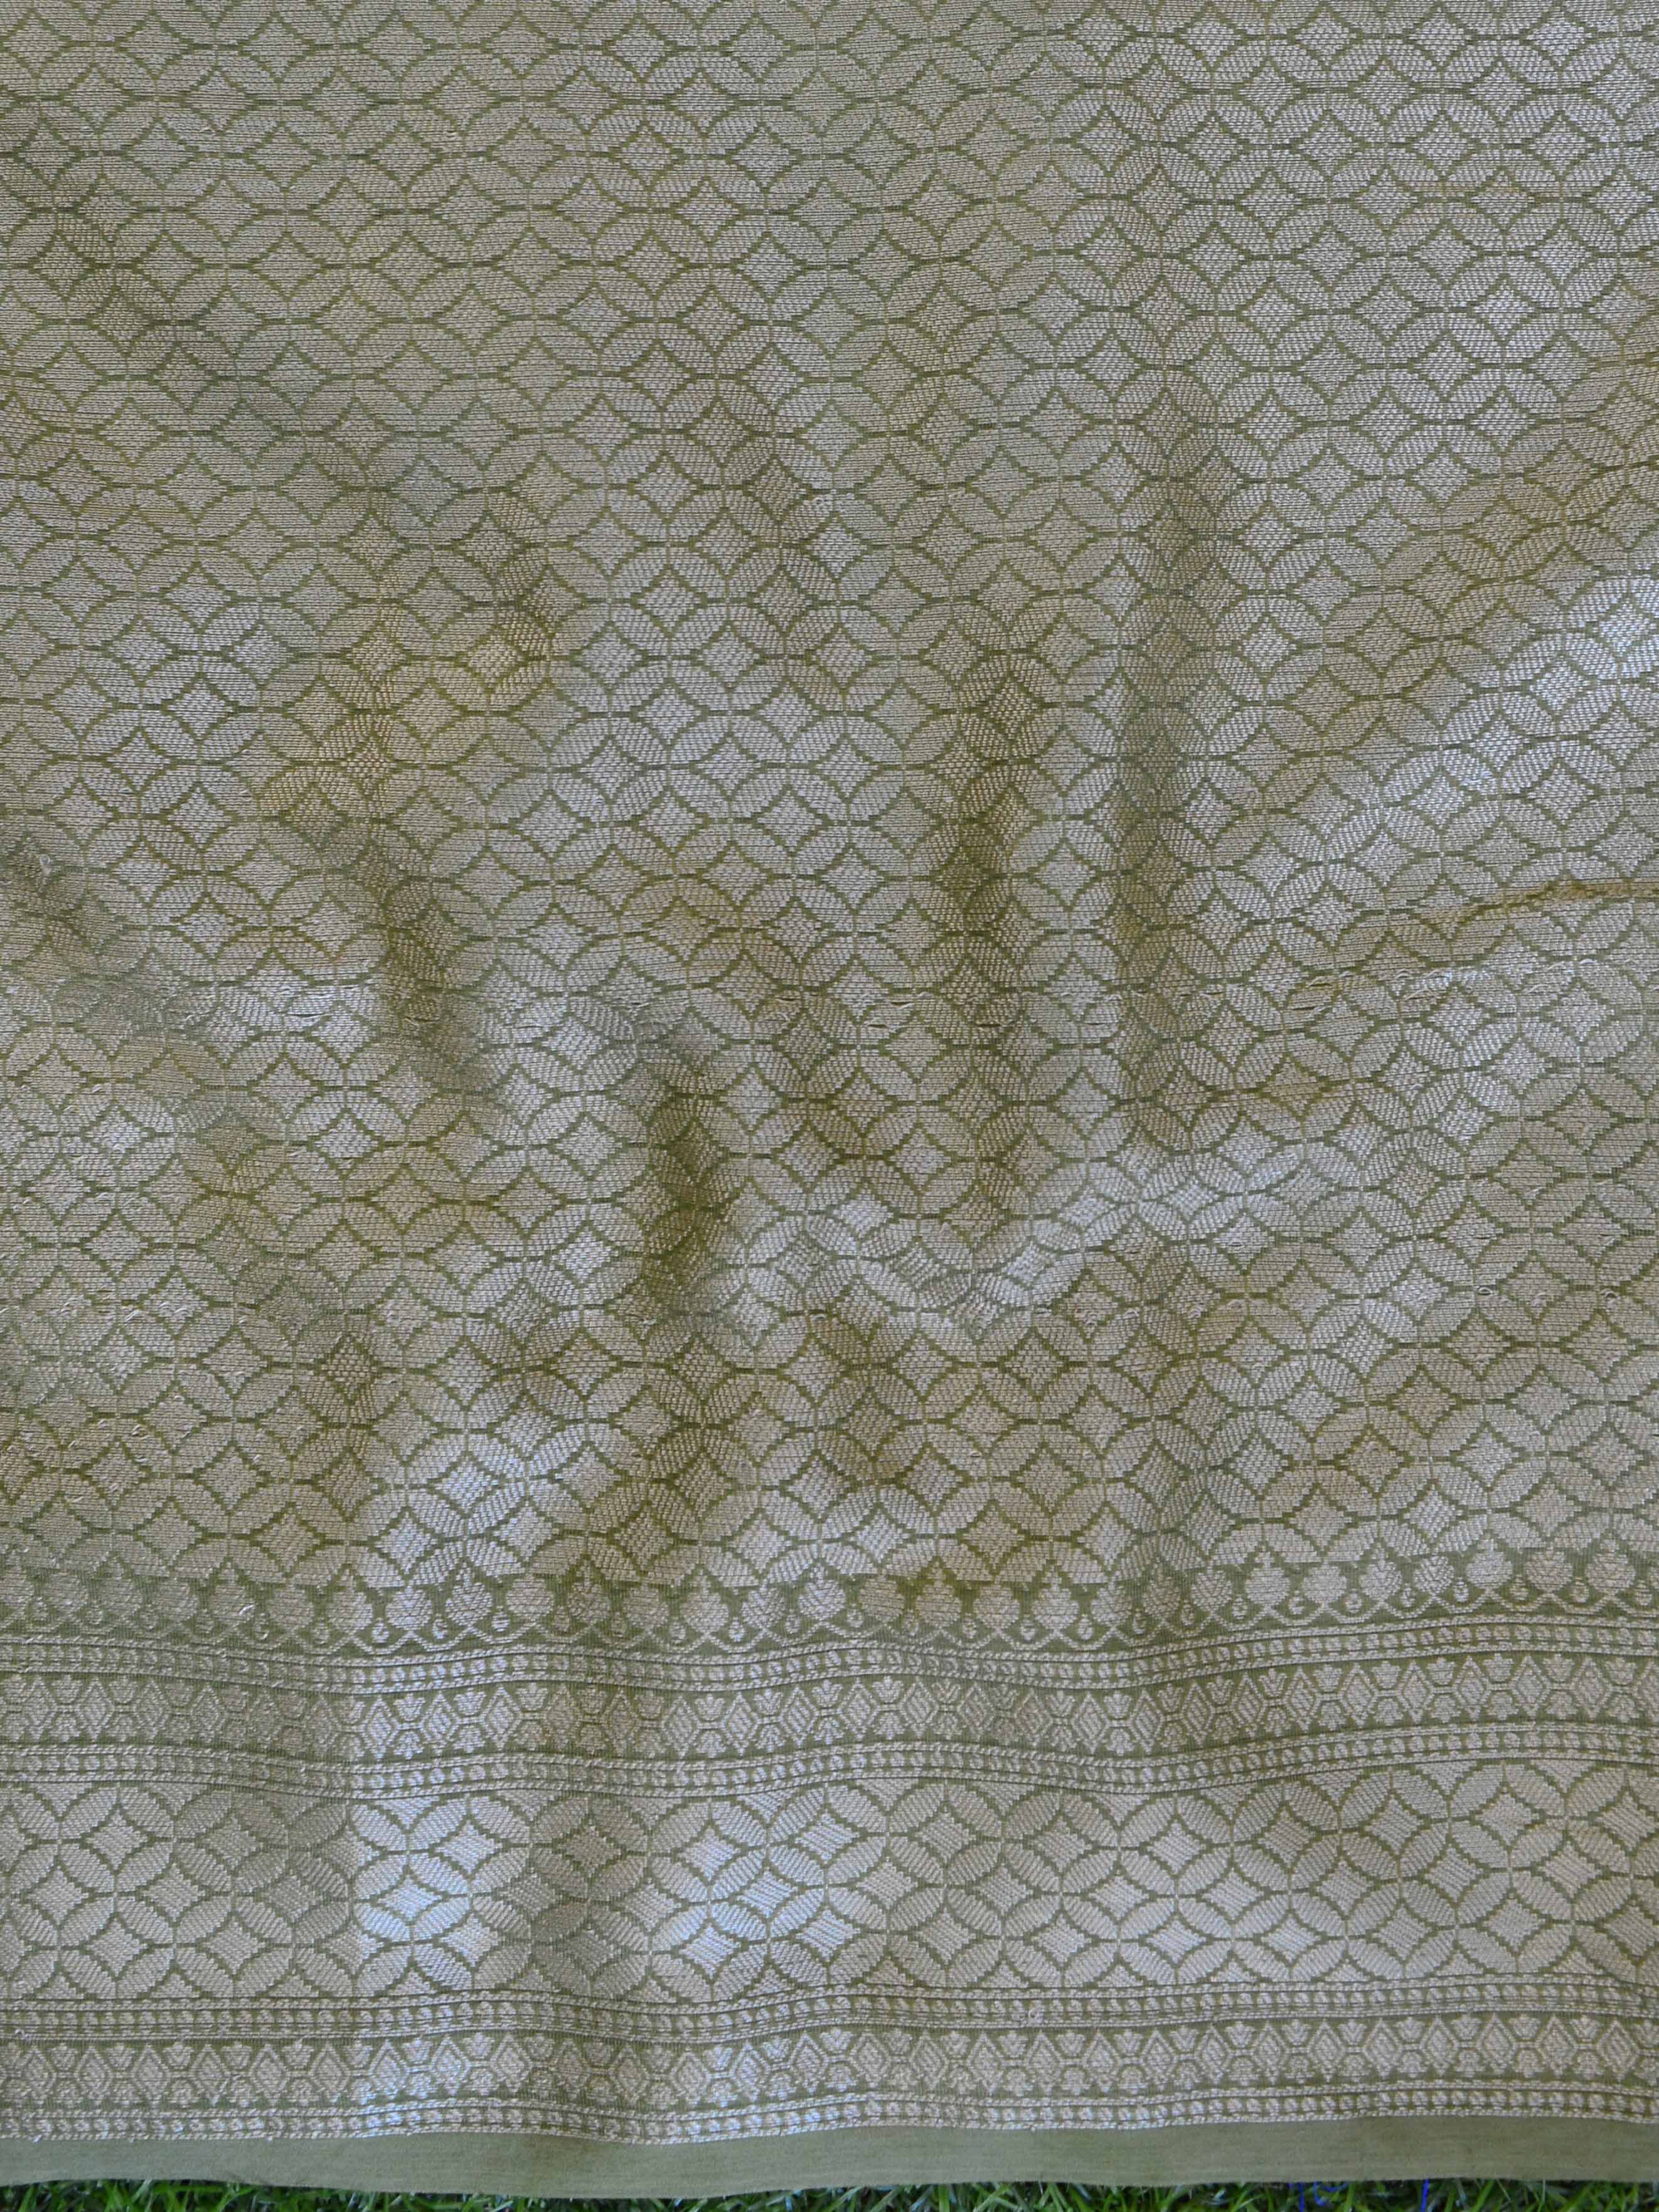 Banarasi Cotton Silk Mix Sari With Polka Dots & Zari Border-Green